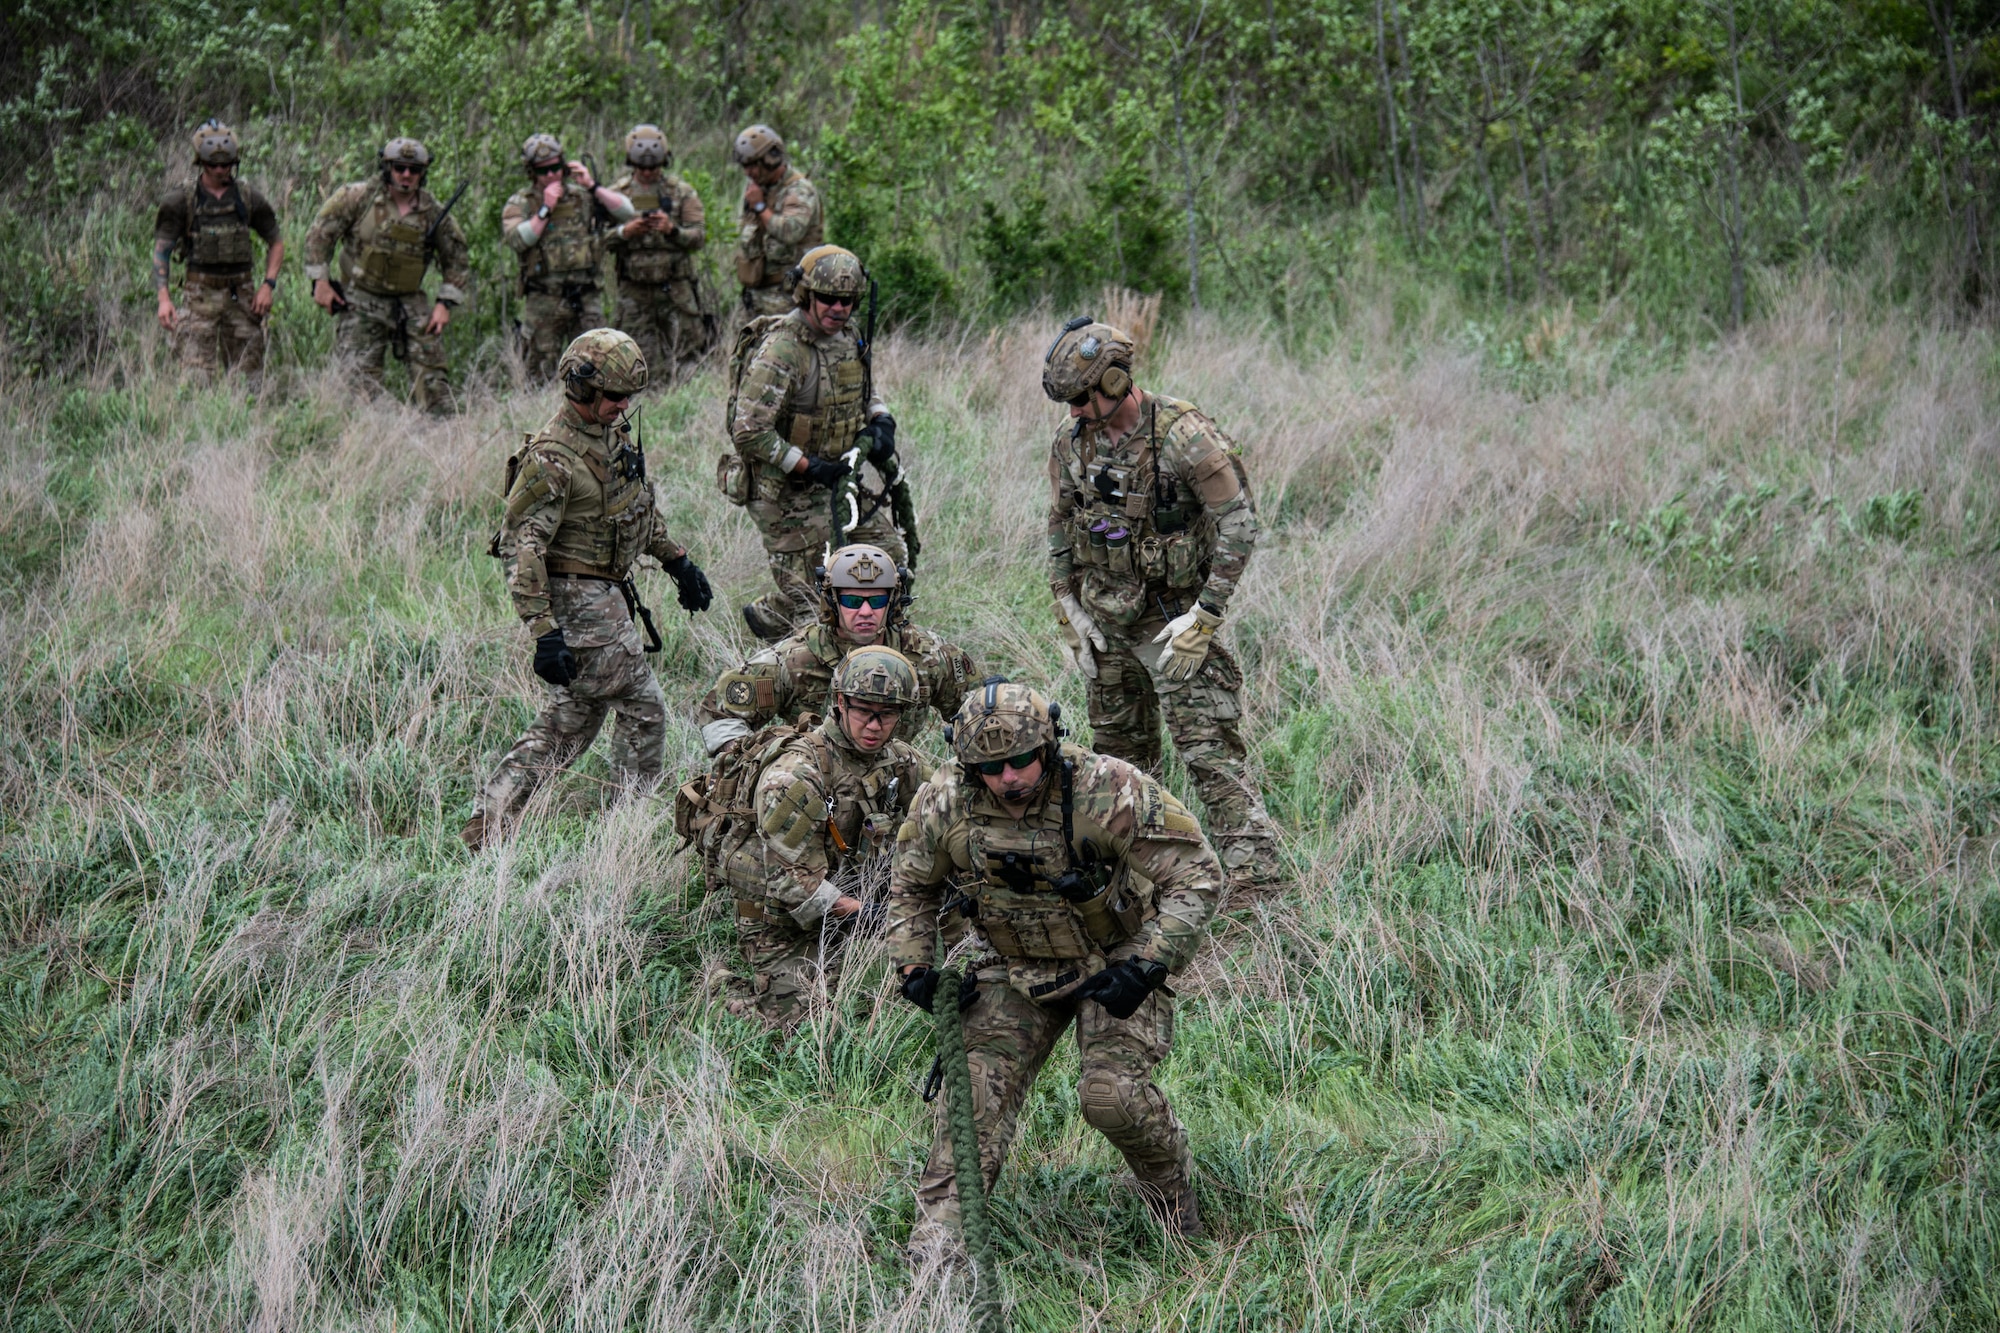 uniformed military members recover rope